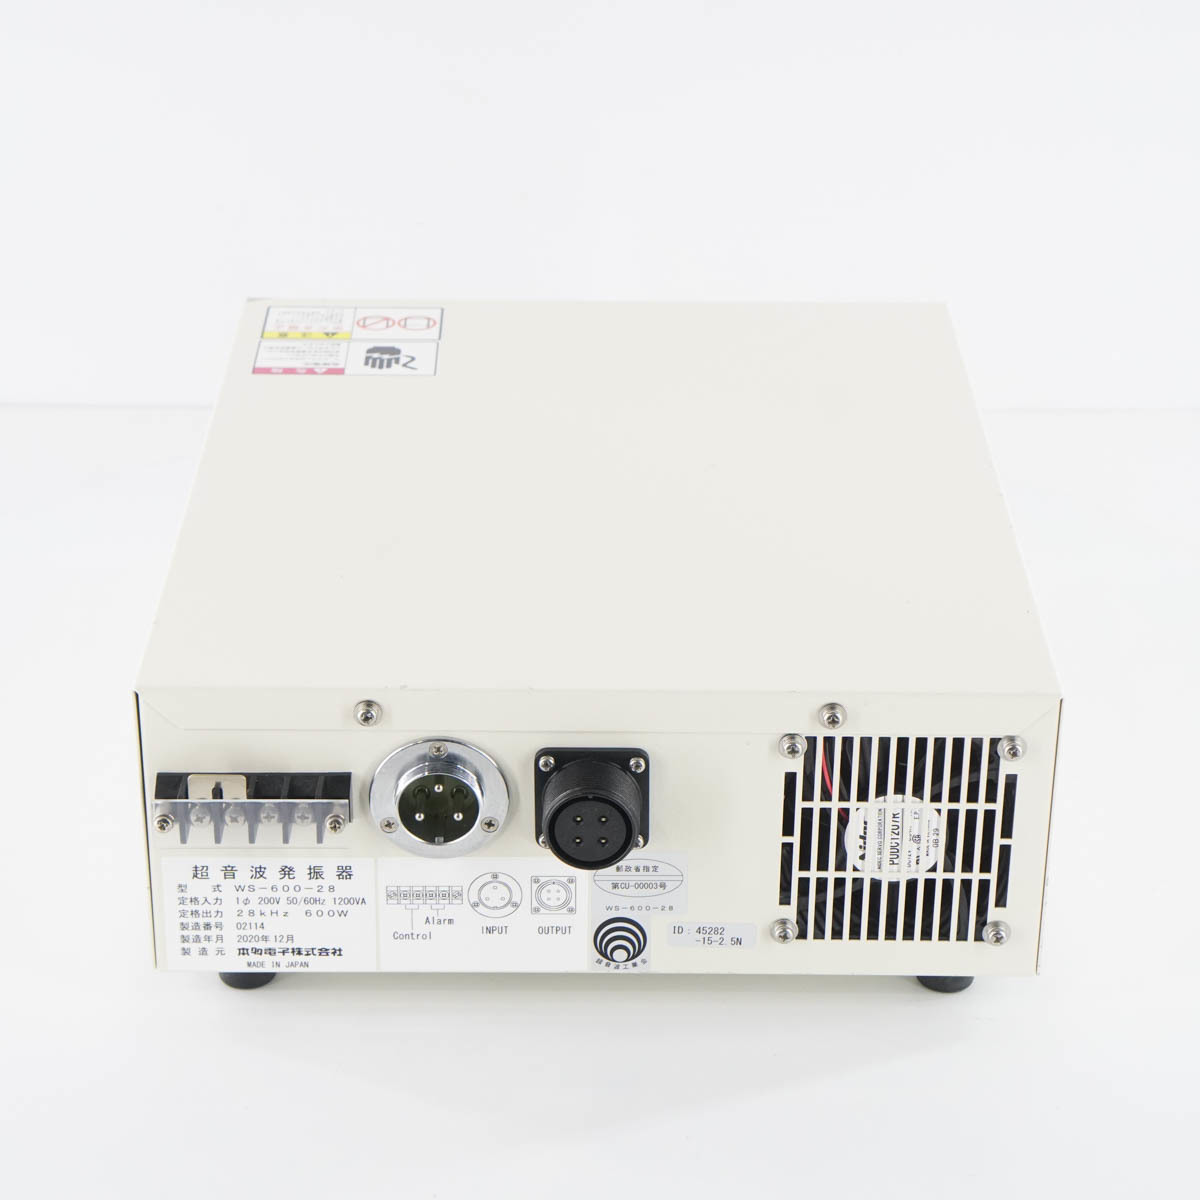 [PG] 8日保証 WS-600-28 HONDA ELECTRONICS 本多電子 ULTRASONIC CLEANER 超音波洗浄機 超音波発振器 単相200V[05523-0210]_画像7